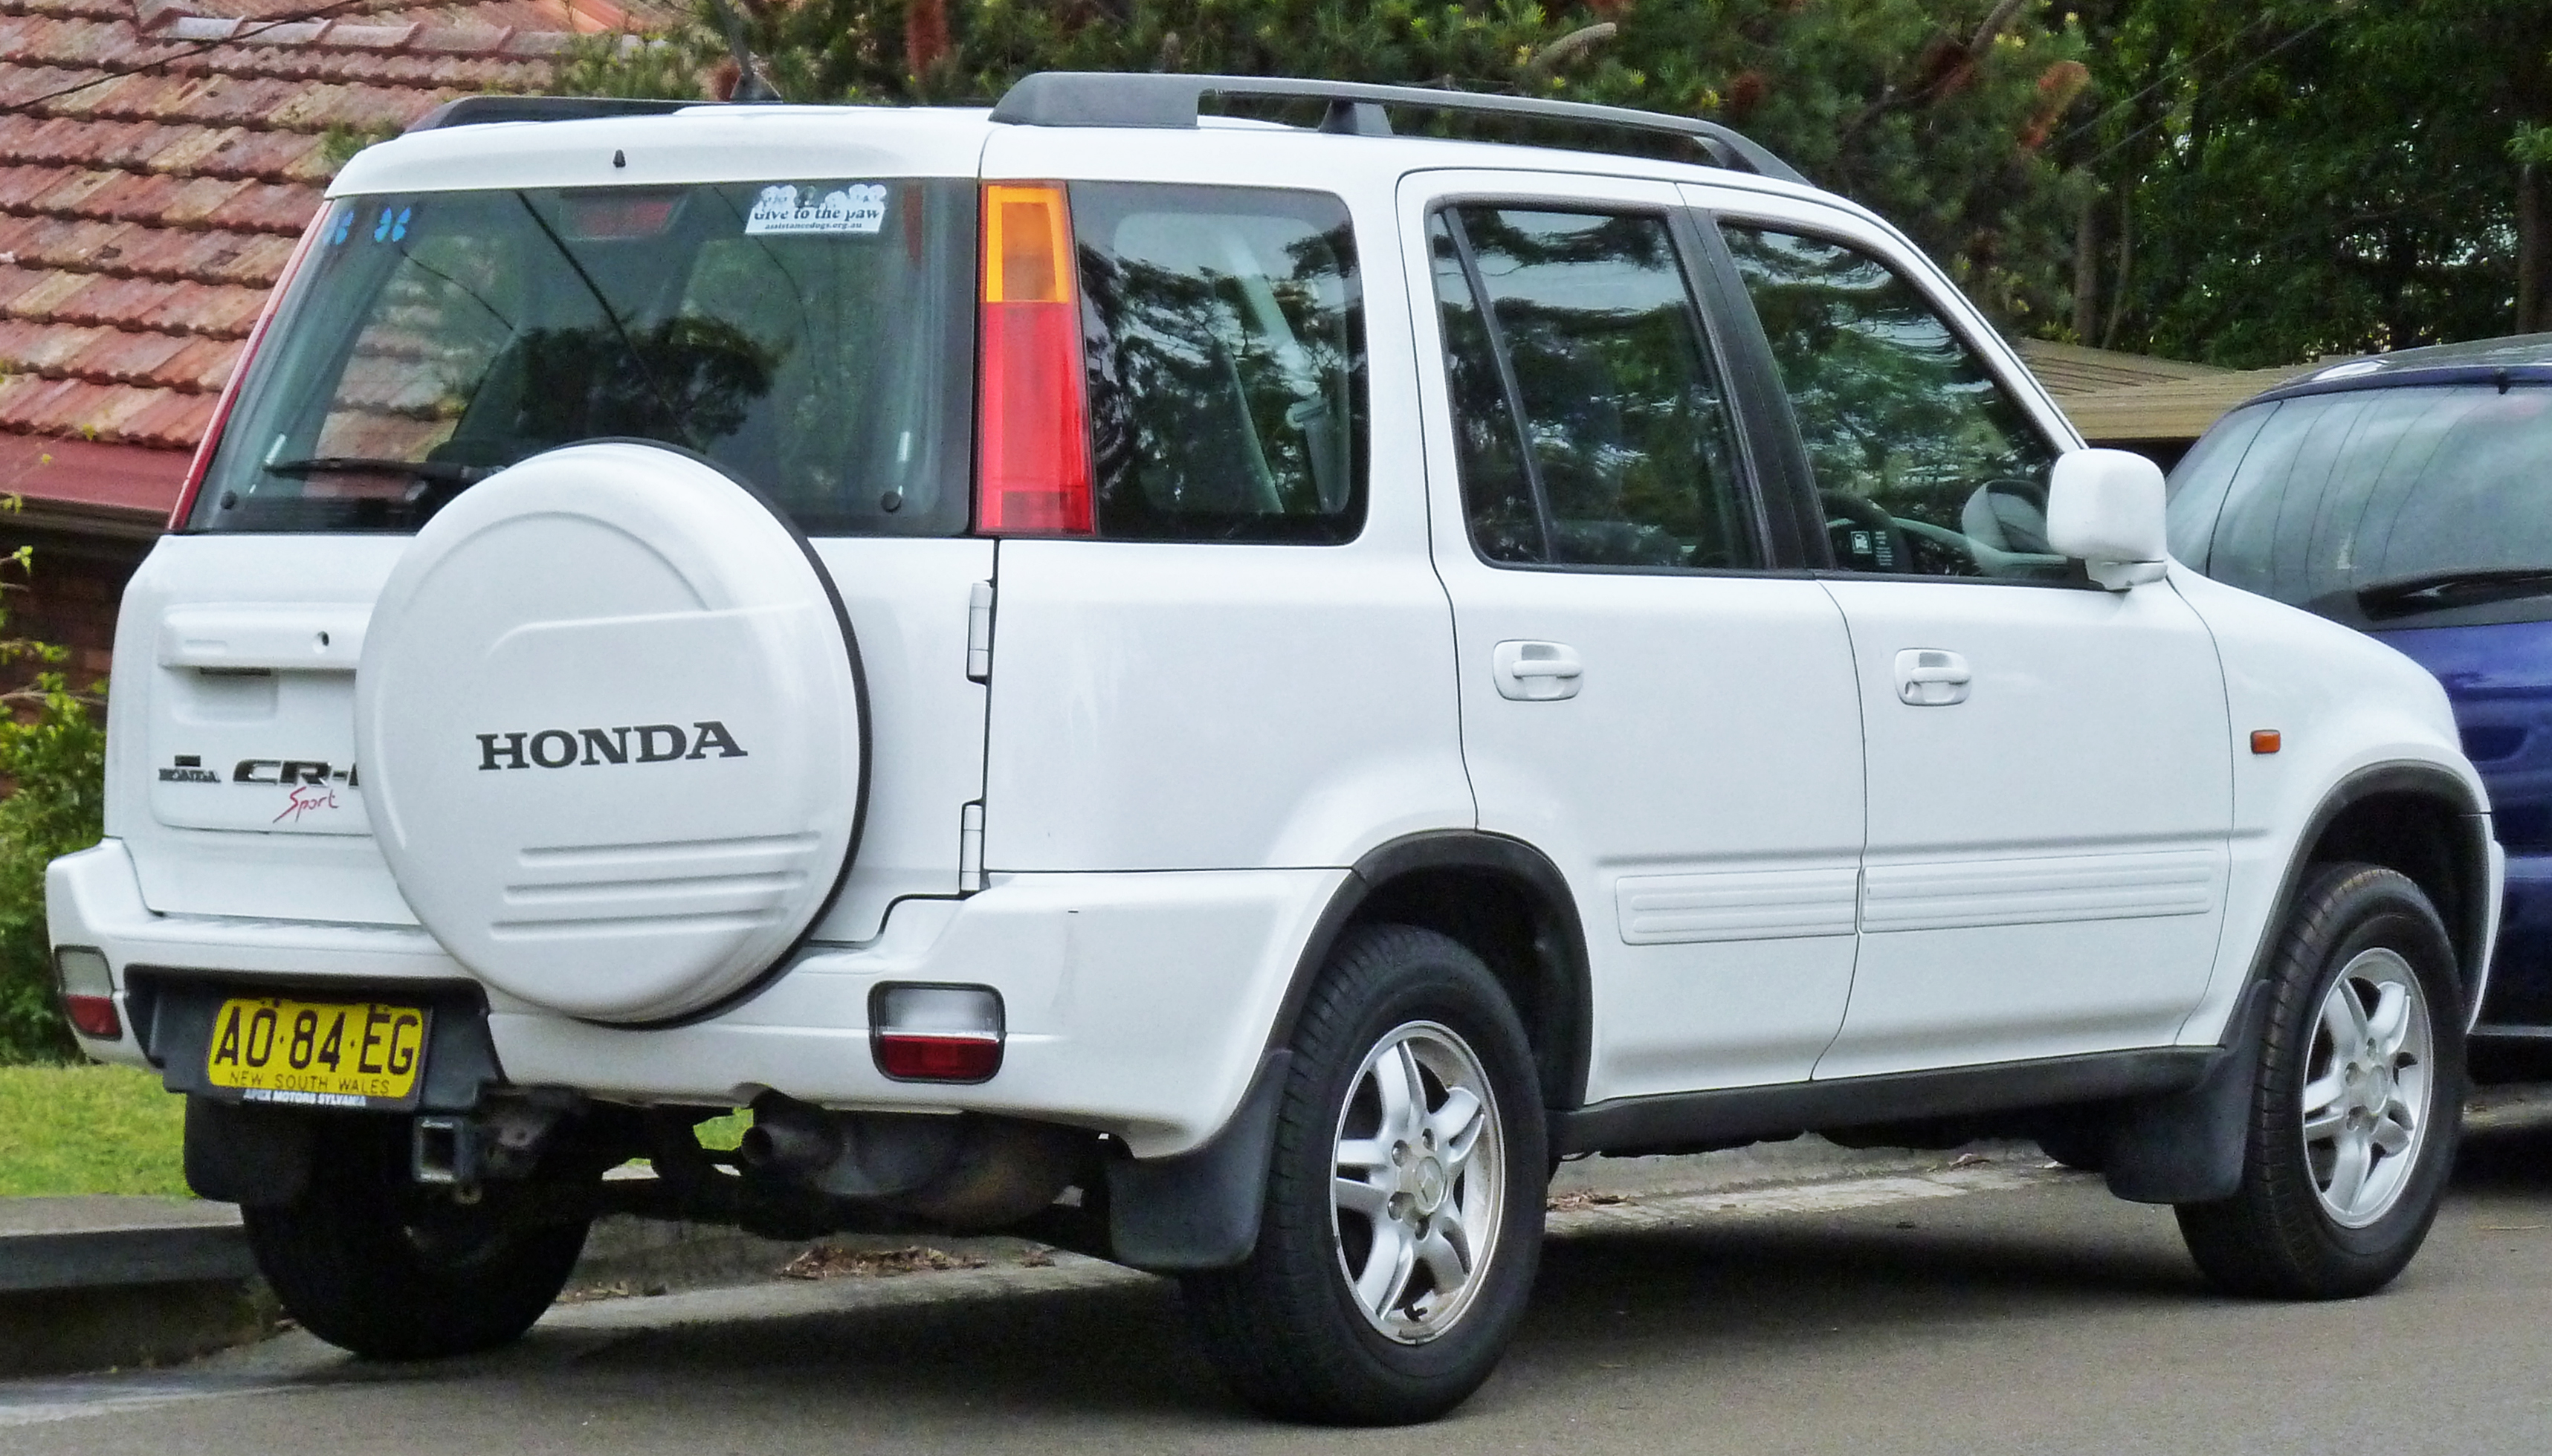 Црв 98 года. Honda CR-V 2000. Honda CR-V 1 1999. Хонда CRV 2000. Honda CRV 2000 год.